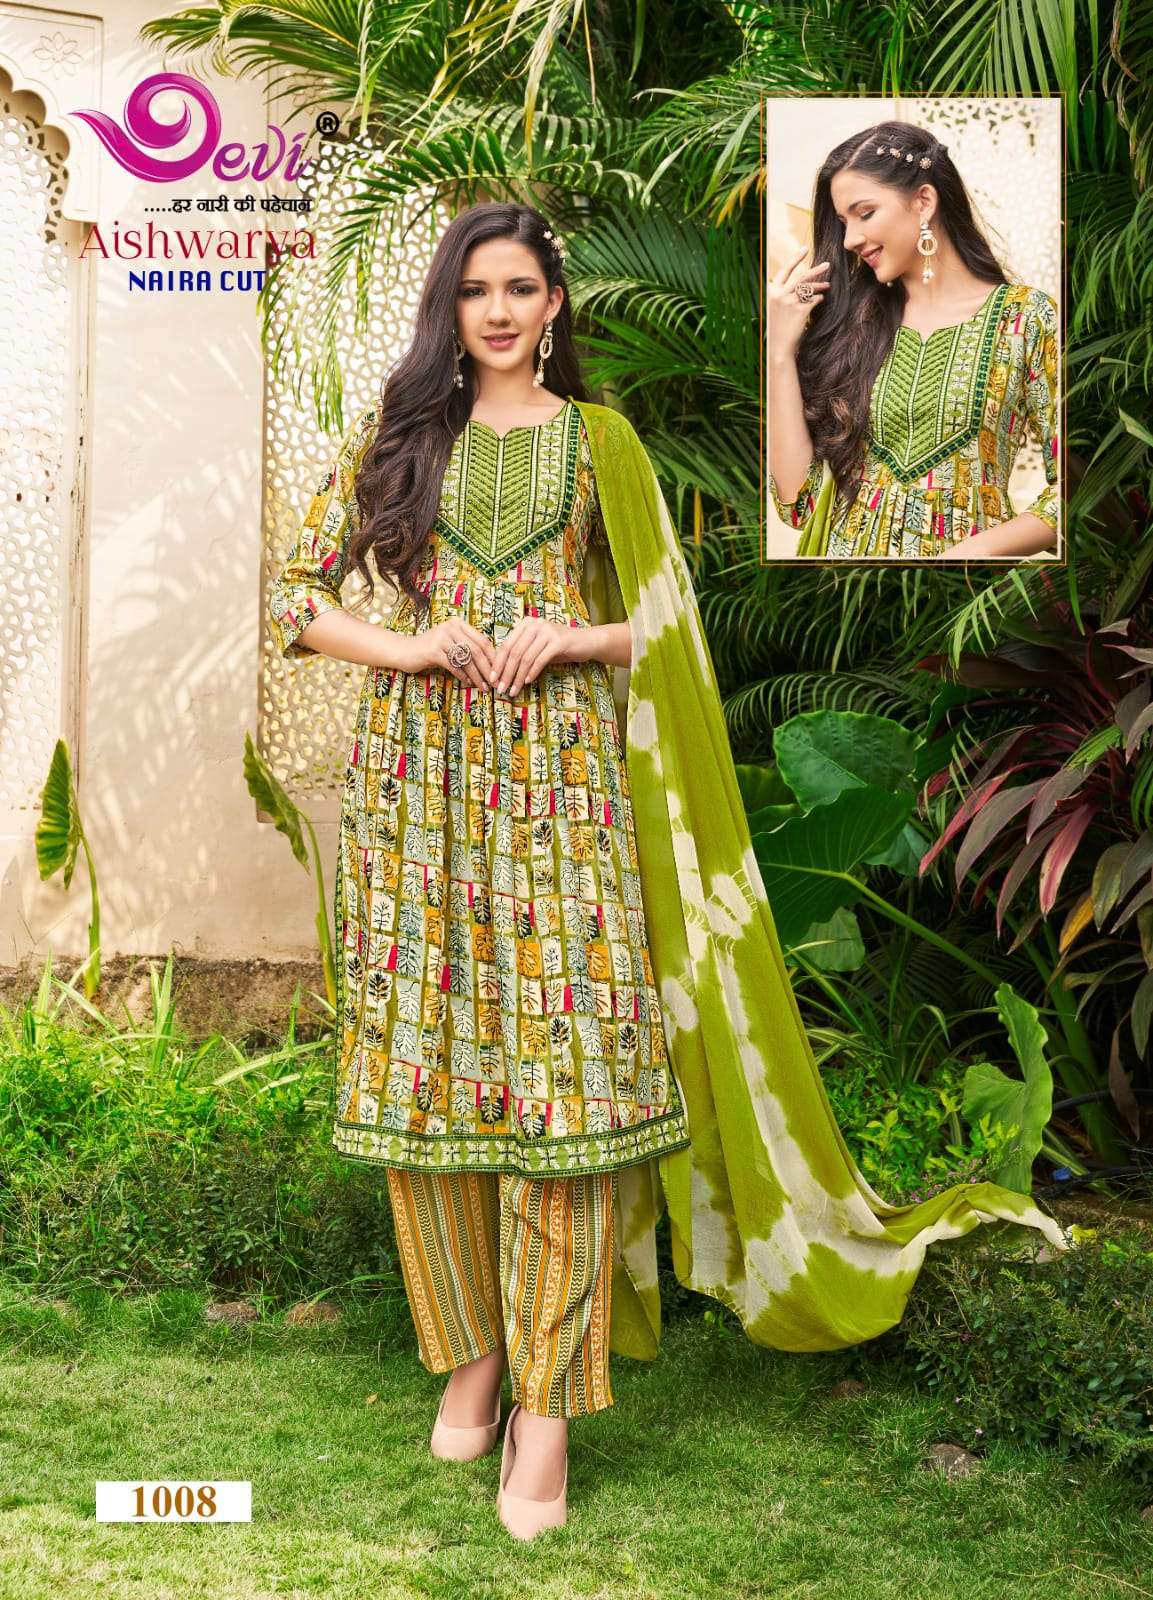 Aishwarya Naira Cut Buy Bhagyalaxmi Wholesale Online Lowest Price Rayon Kurta Suit Sets